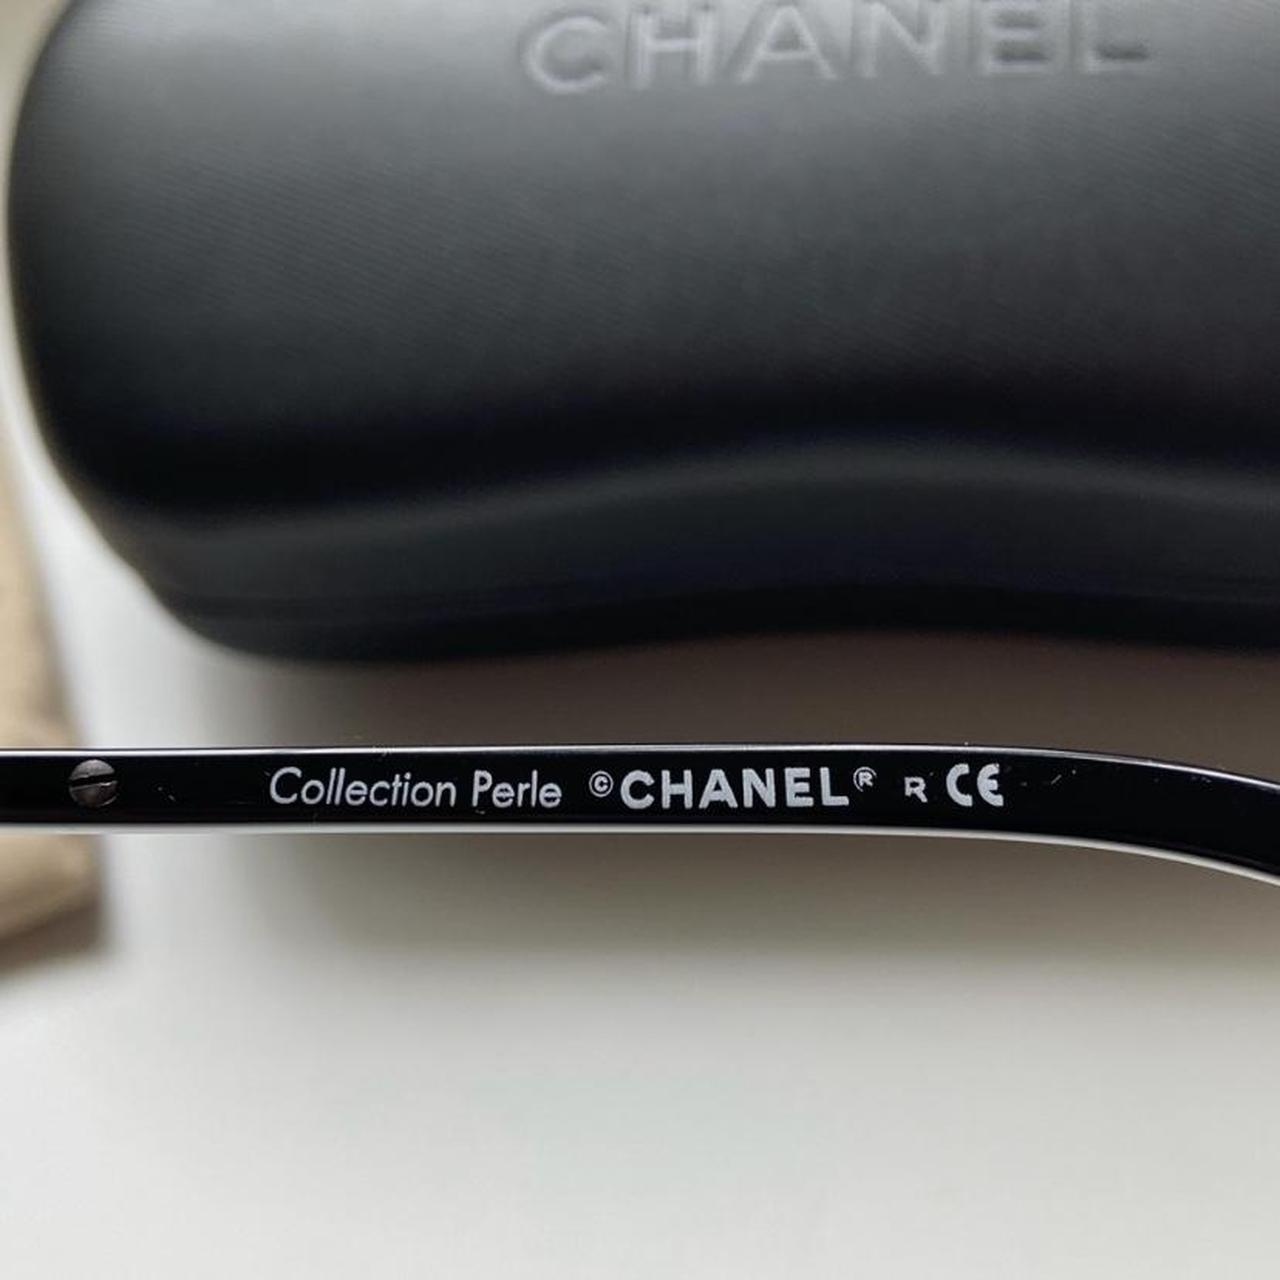 Chanel Women's Oversized Sunglasses - Black